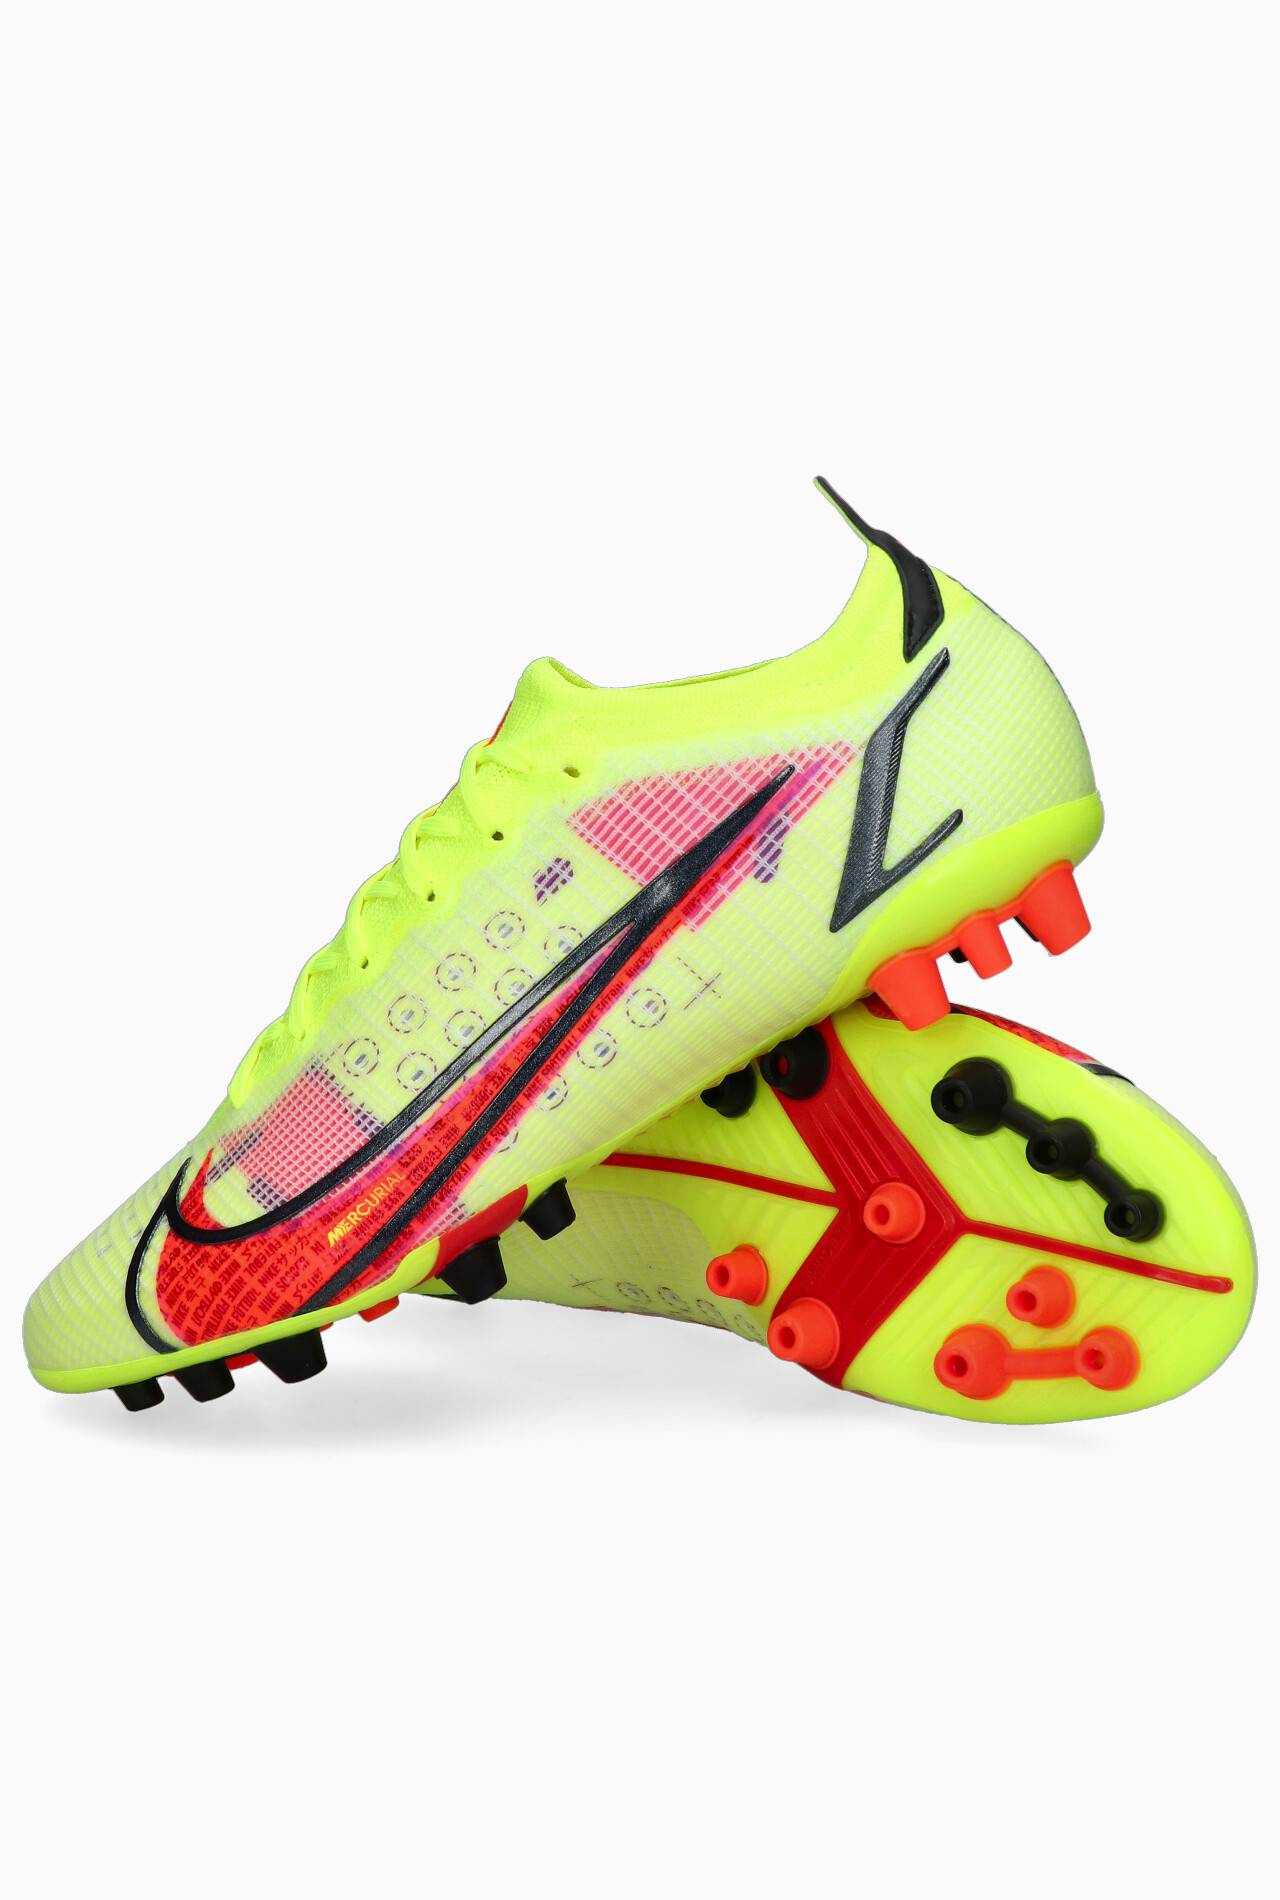 Cleats Nike Mercurial Vapor 14 Elite Ag R Gol Com Football Boots Equipment